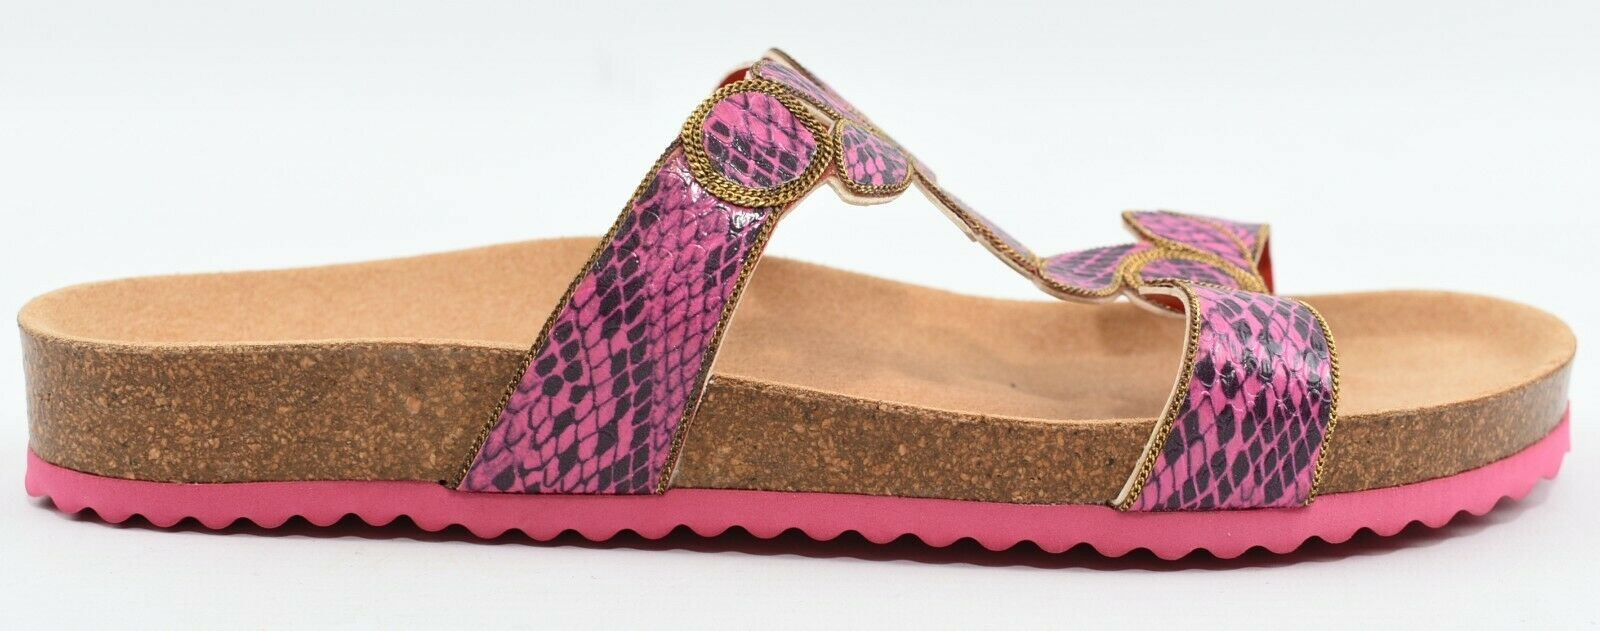 SUNE ISLAND Women's H-bar Sandals, Fuchsia Pink, size UK 5 EU 38